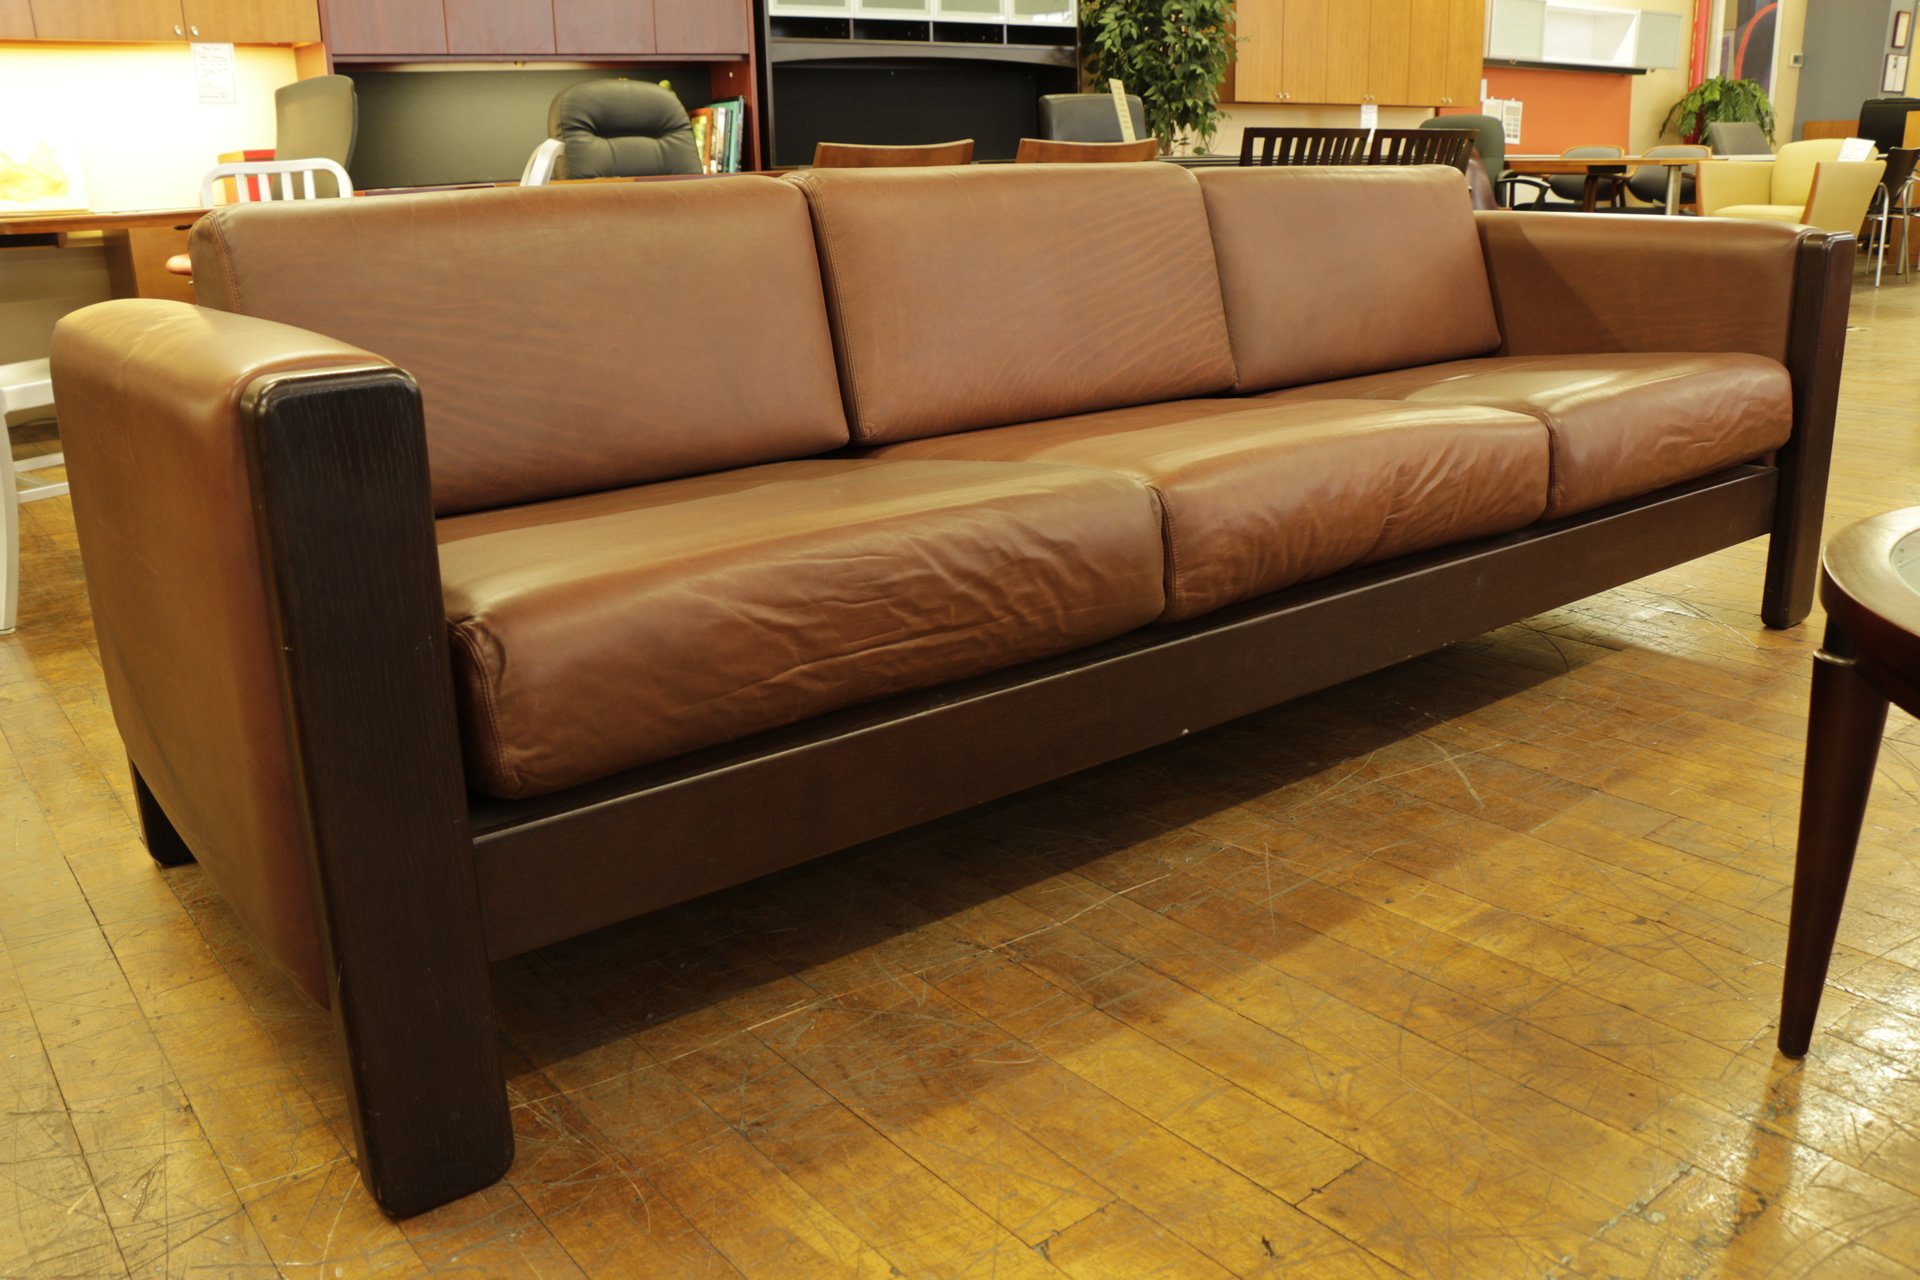 Knoll Chocolate Leather Sofa with Espresso Wood Trim (Used)